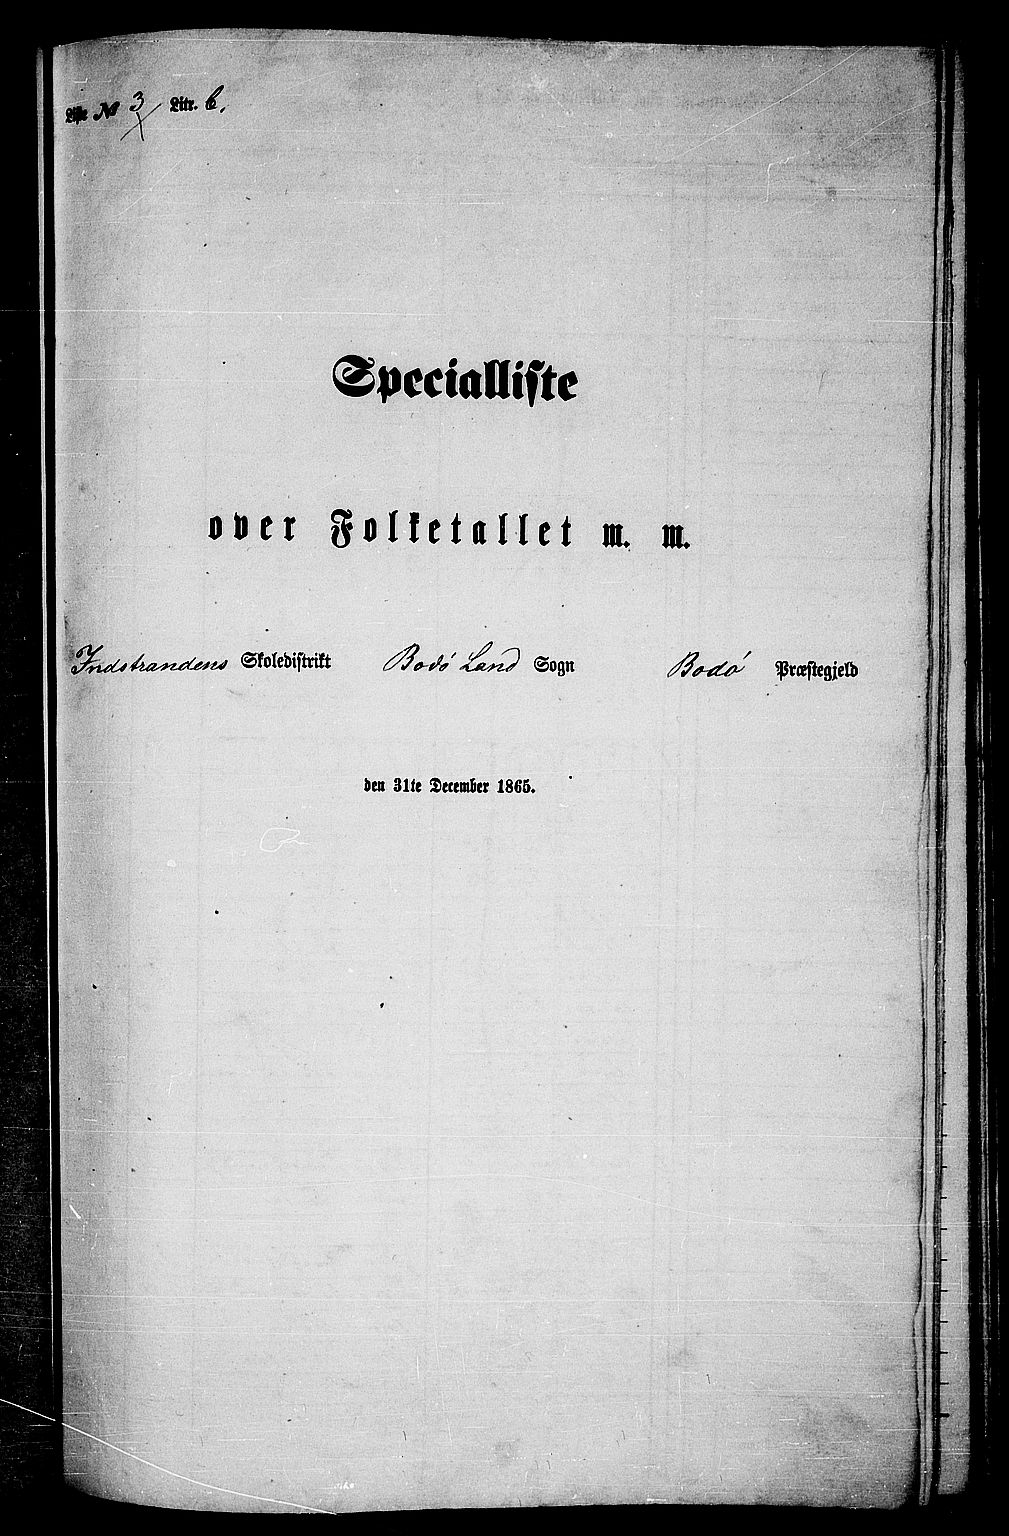 RA, Folketelling 1865 for 1843L Bodø prestegjeld, Bodø landsokn, 1865, s. 64